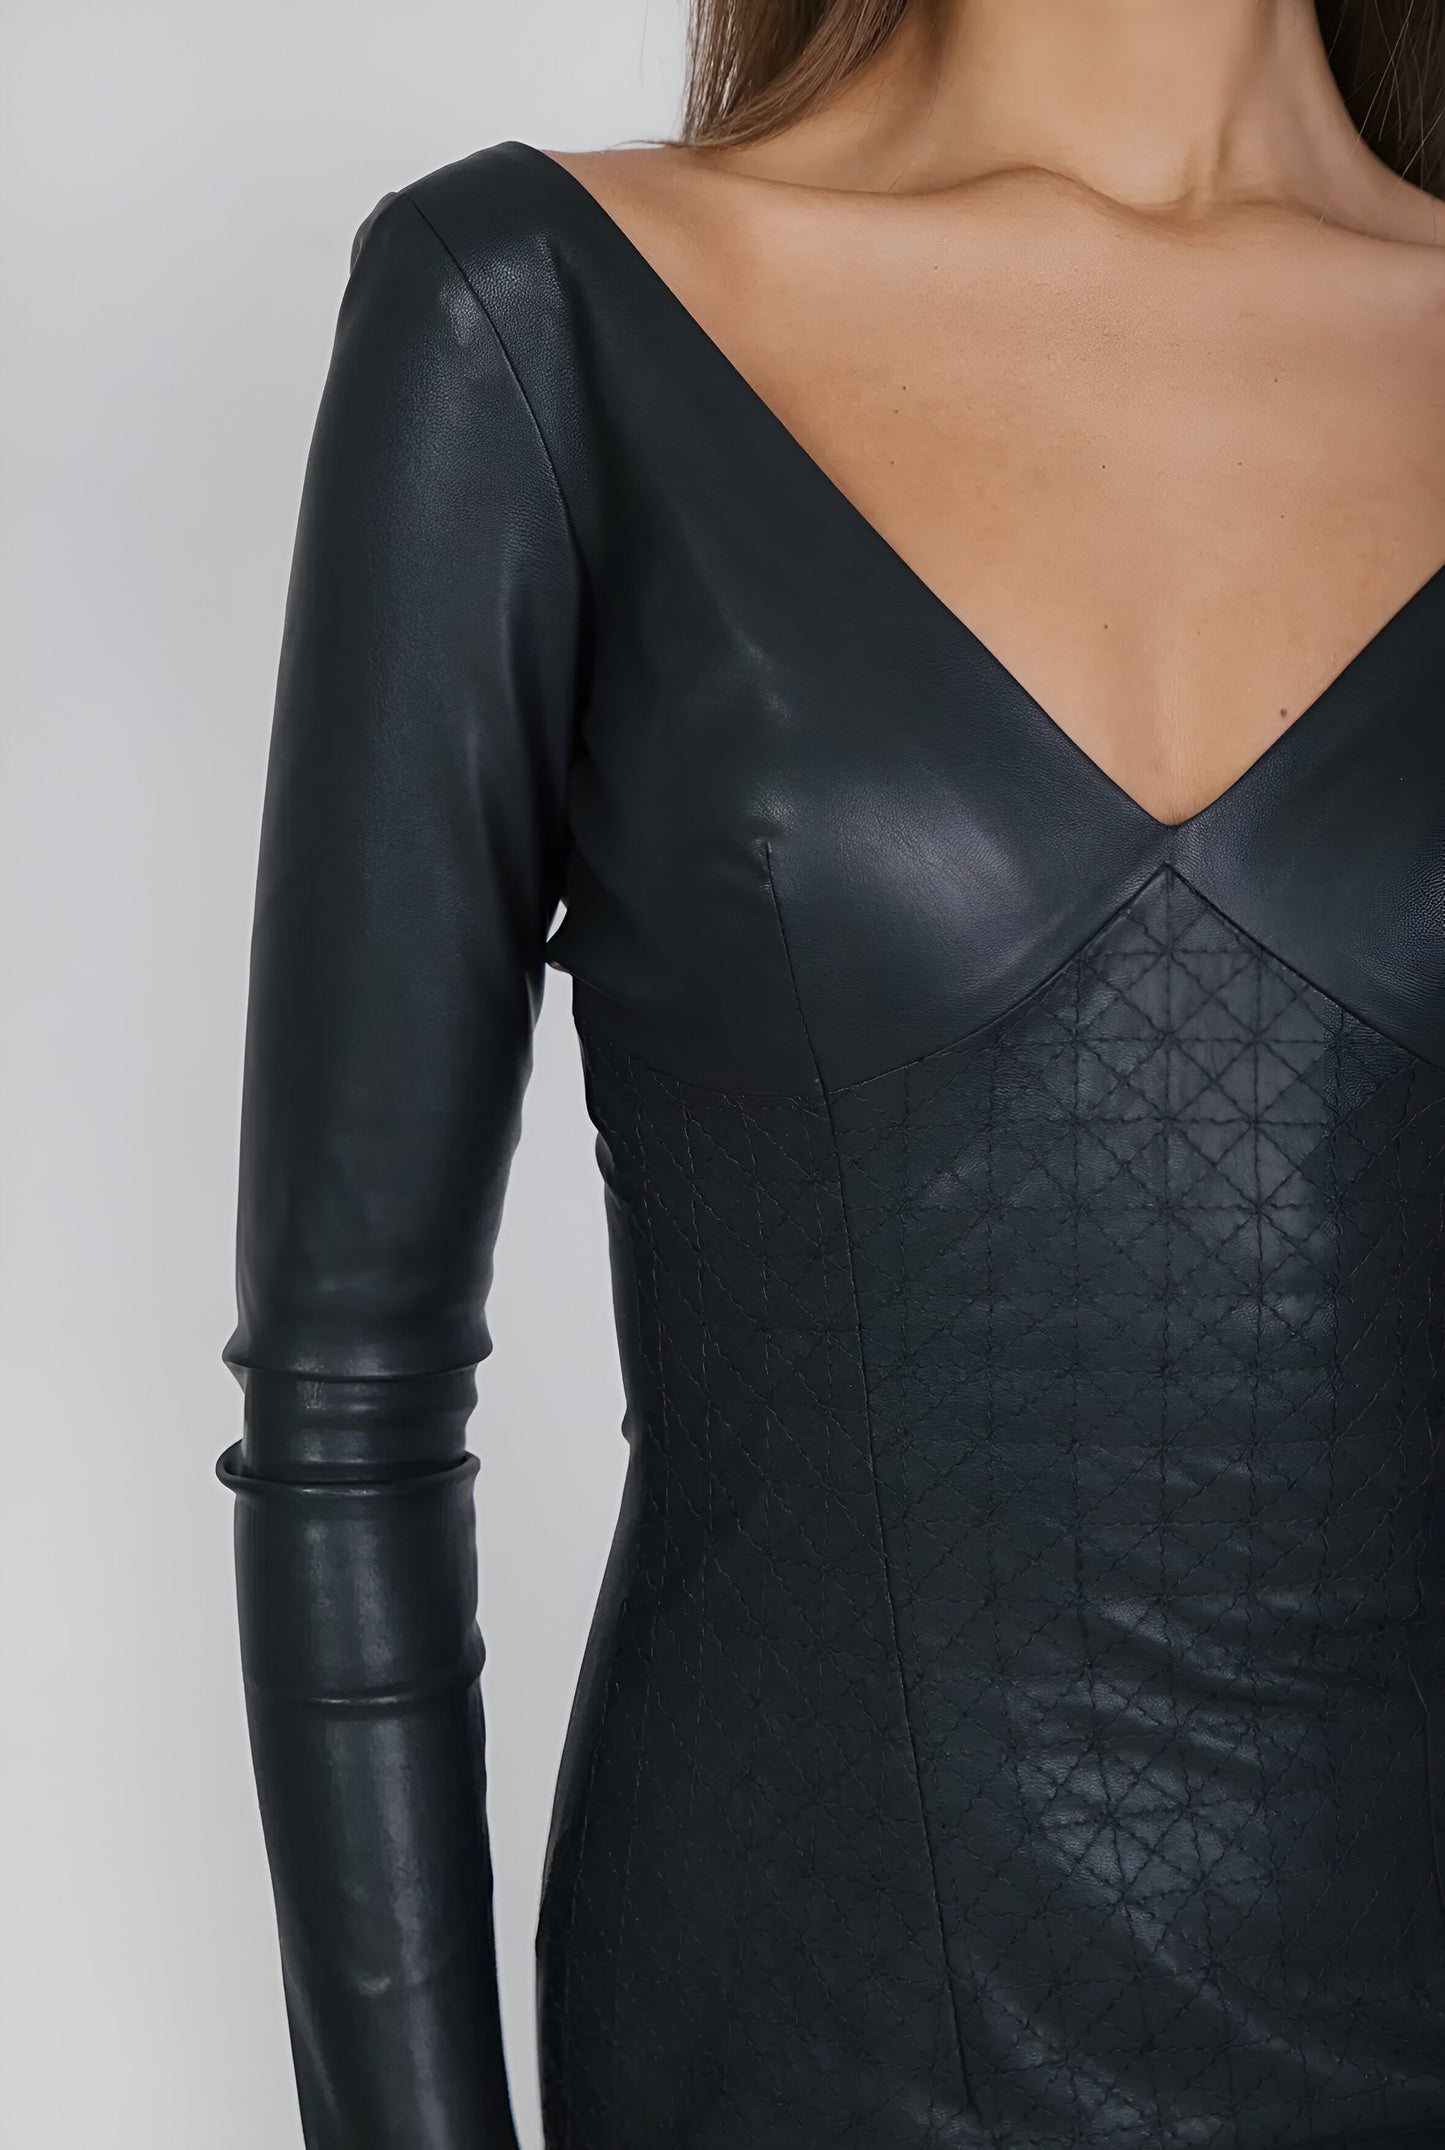 Sleek Leather Dress